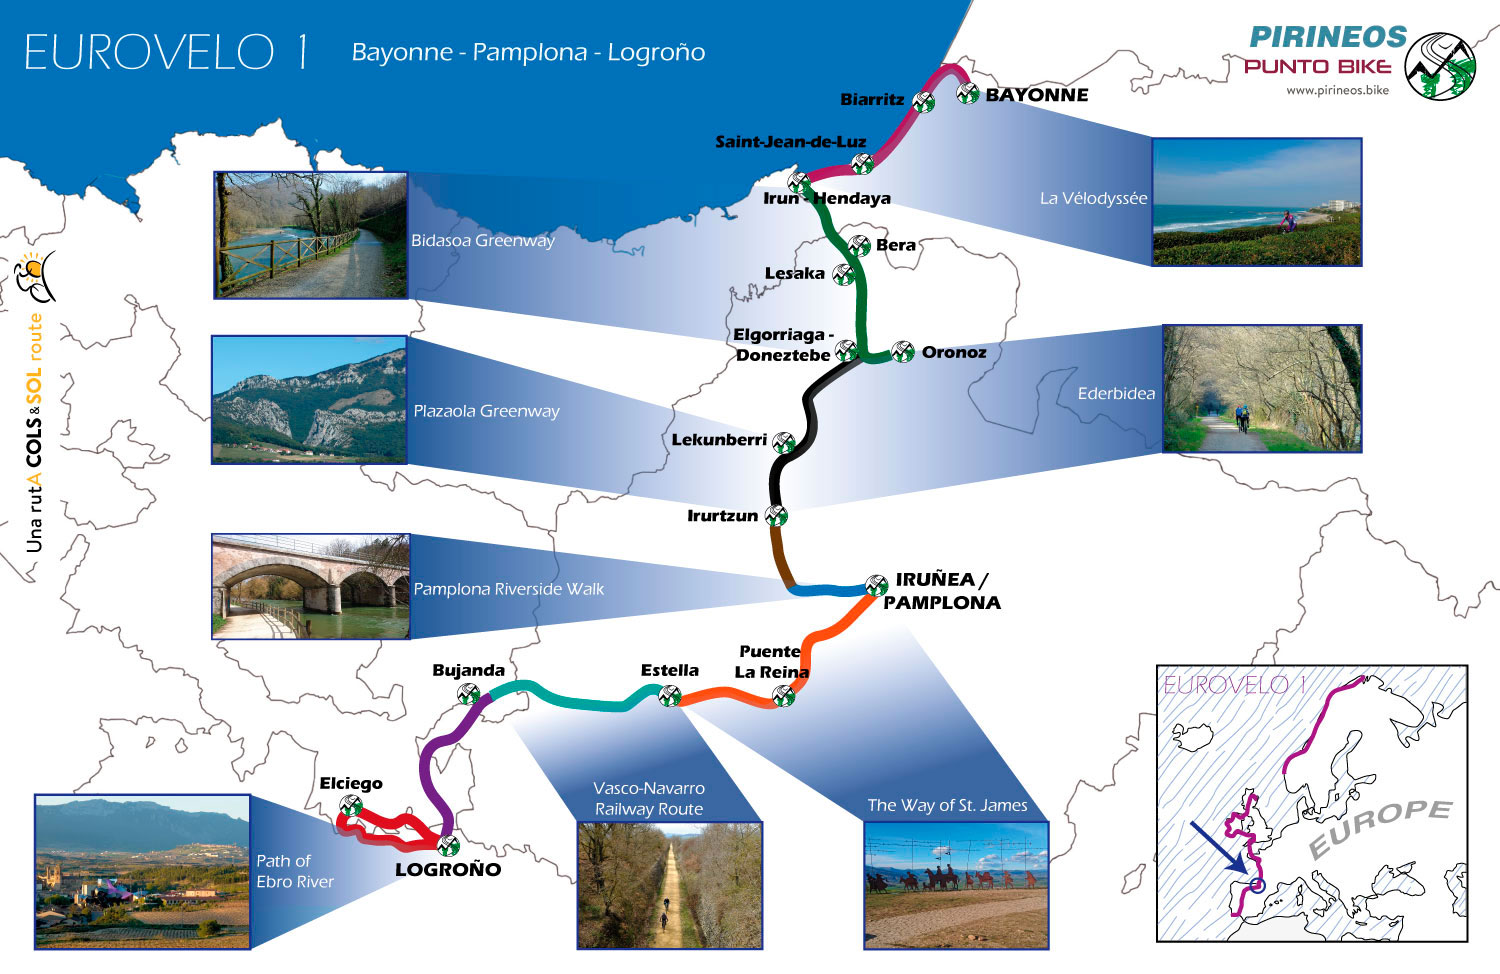 Map-Eurovelo-1-Pirineos-Punto-Bike